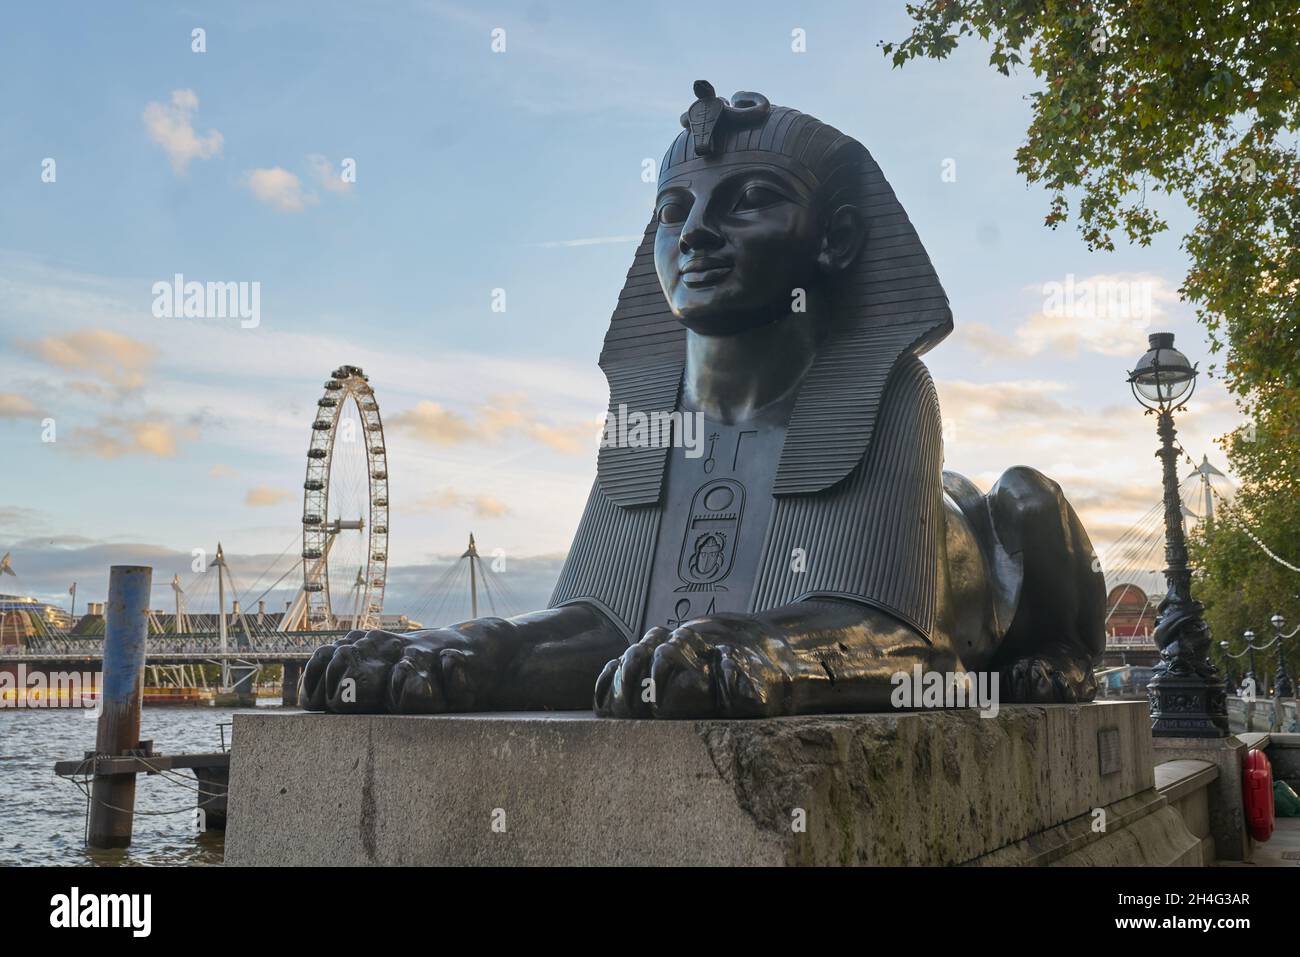 Statue of Sphinx cleopatra;s needle london Stock Photo